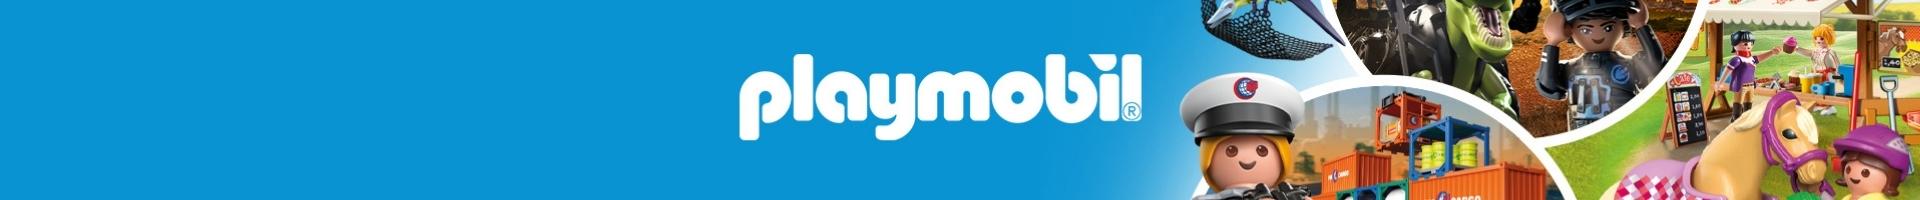 Playmobil Store